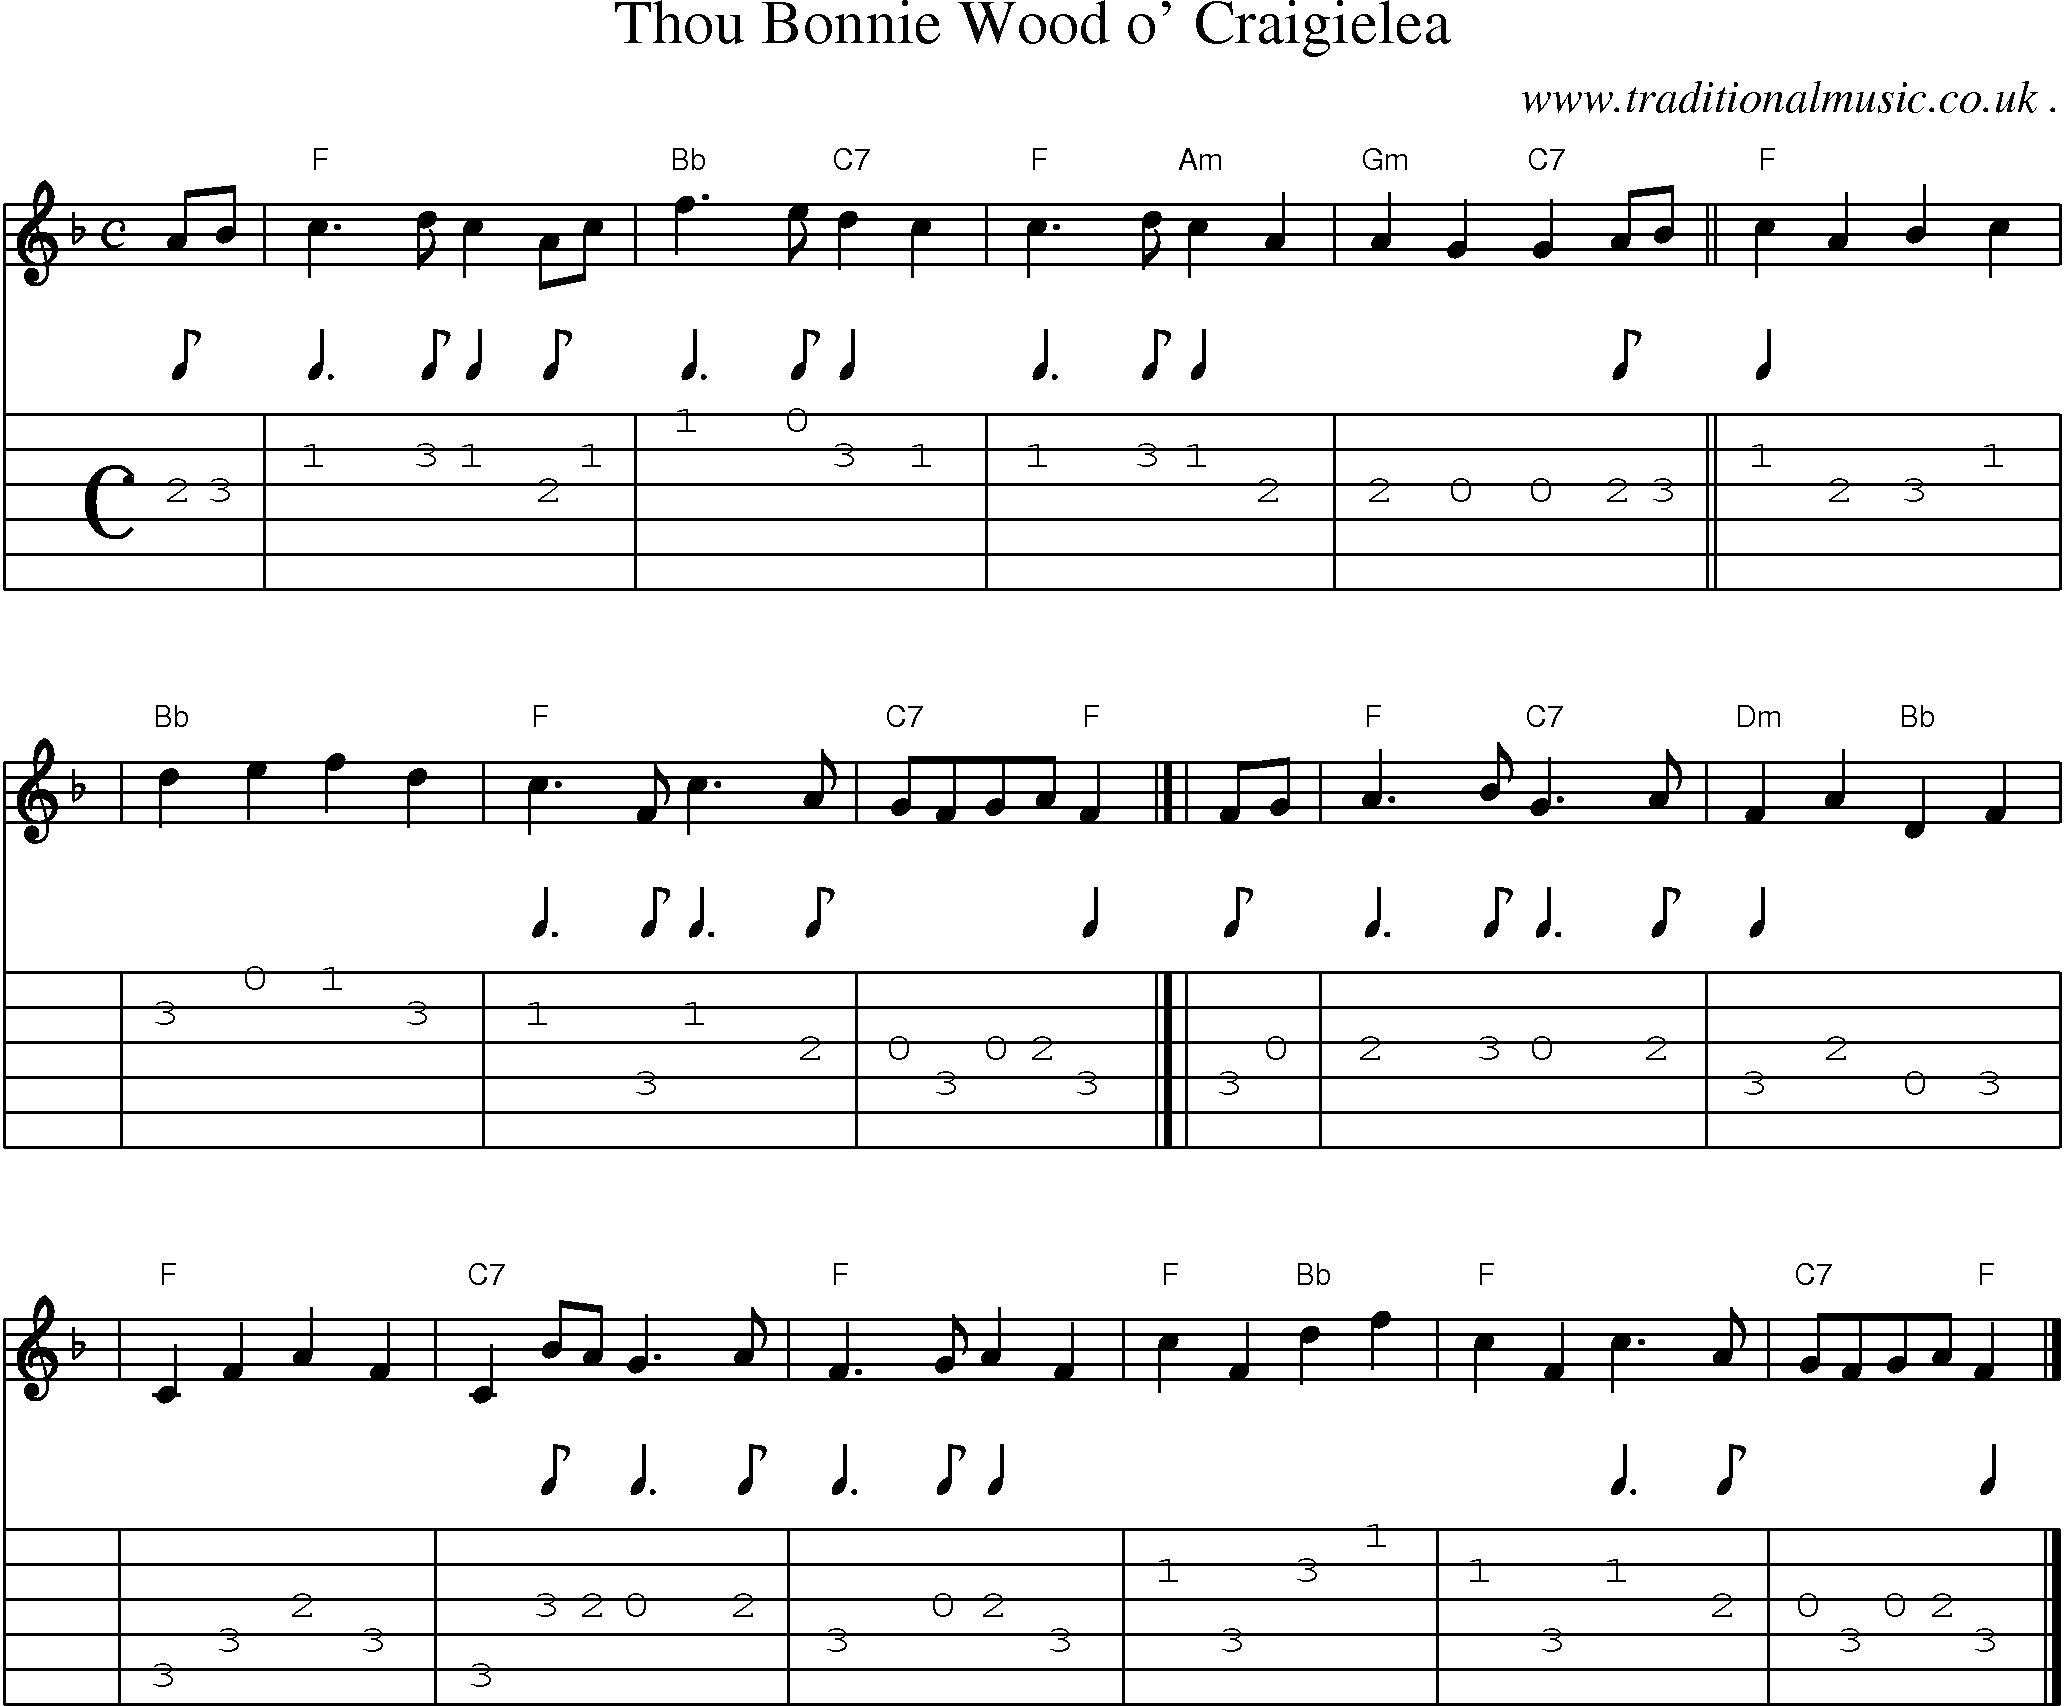 Sheet-music  score, Chords and Guitar Tabs for Thou Bonnie Wood O Craigielea